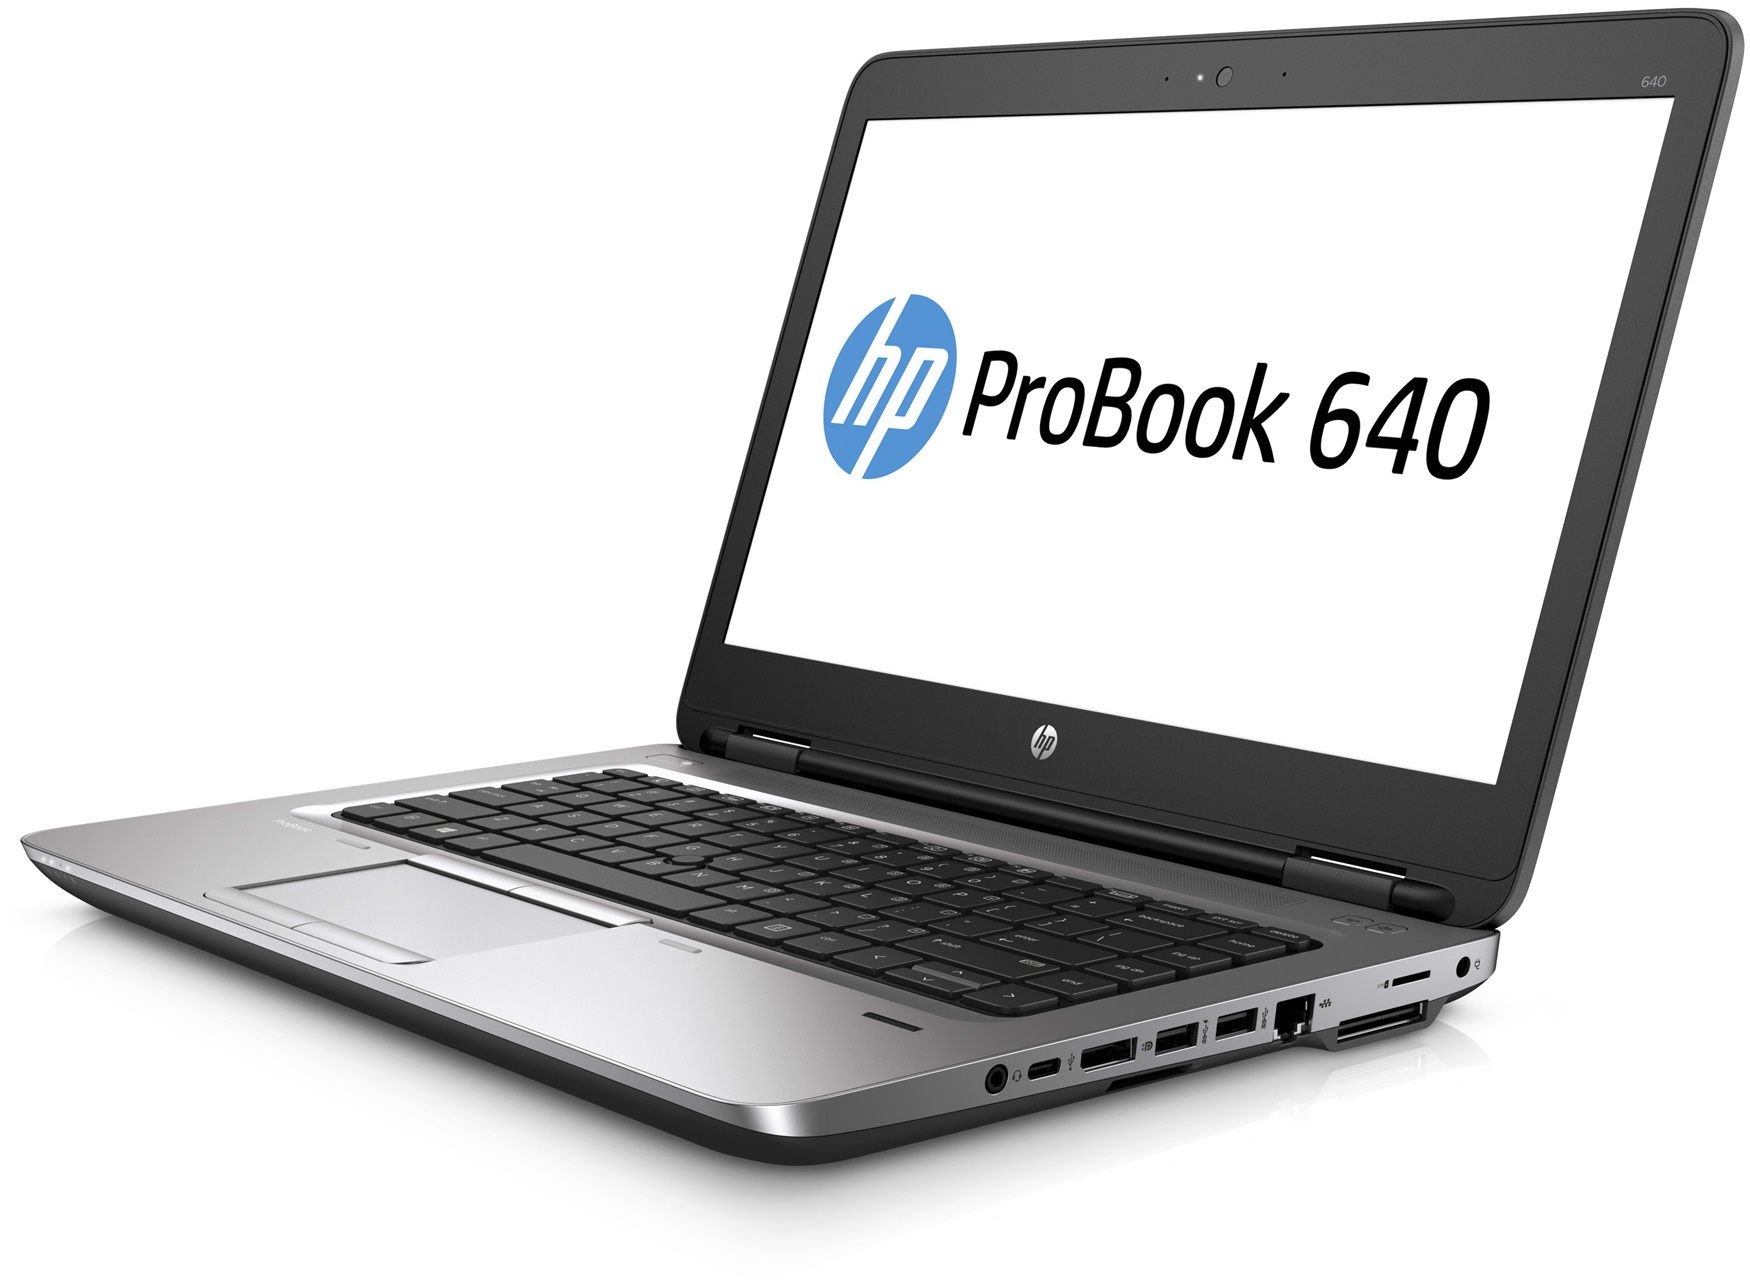 Portátil HP Probook 640 G2 GRADO B (Intel Core i5 6200U 2.3Ghz/8GB/240SSD-M.2/14FHD/NO-DVD/W10P) Preinstalado